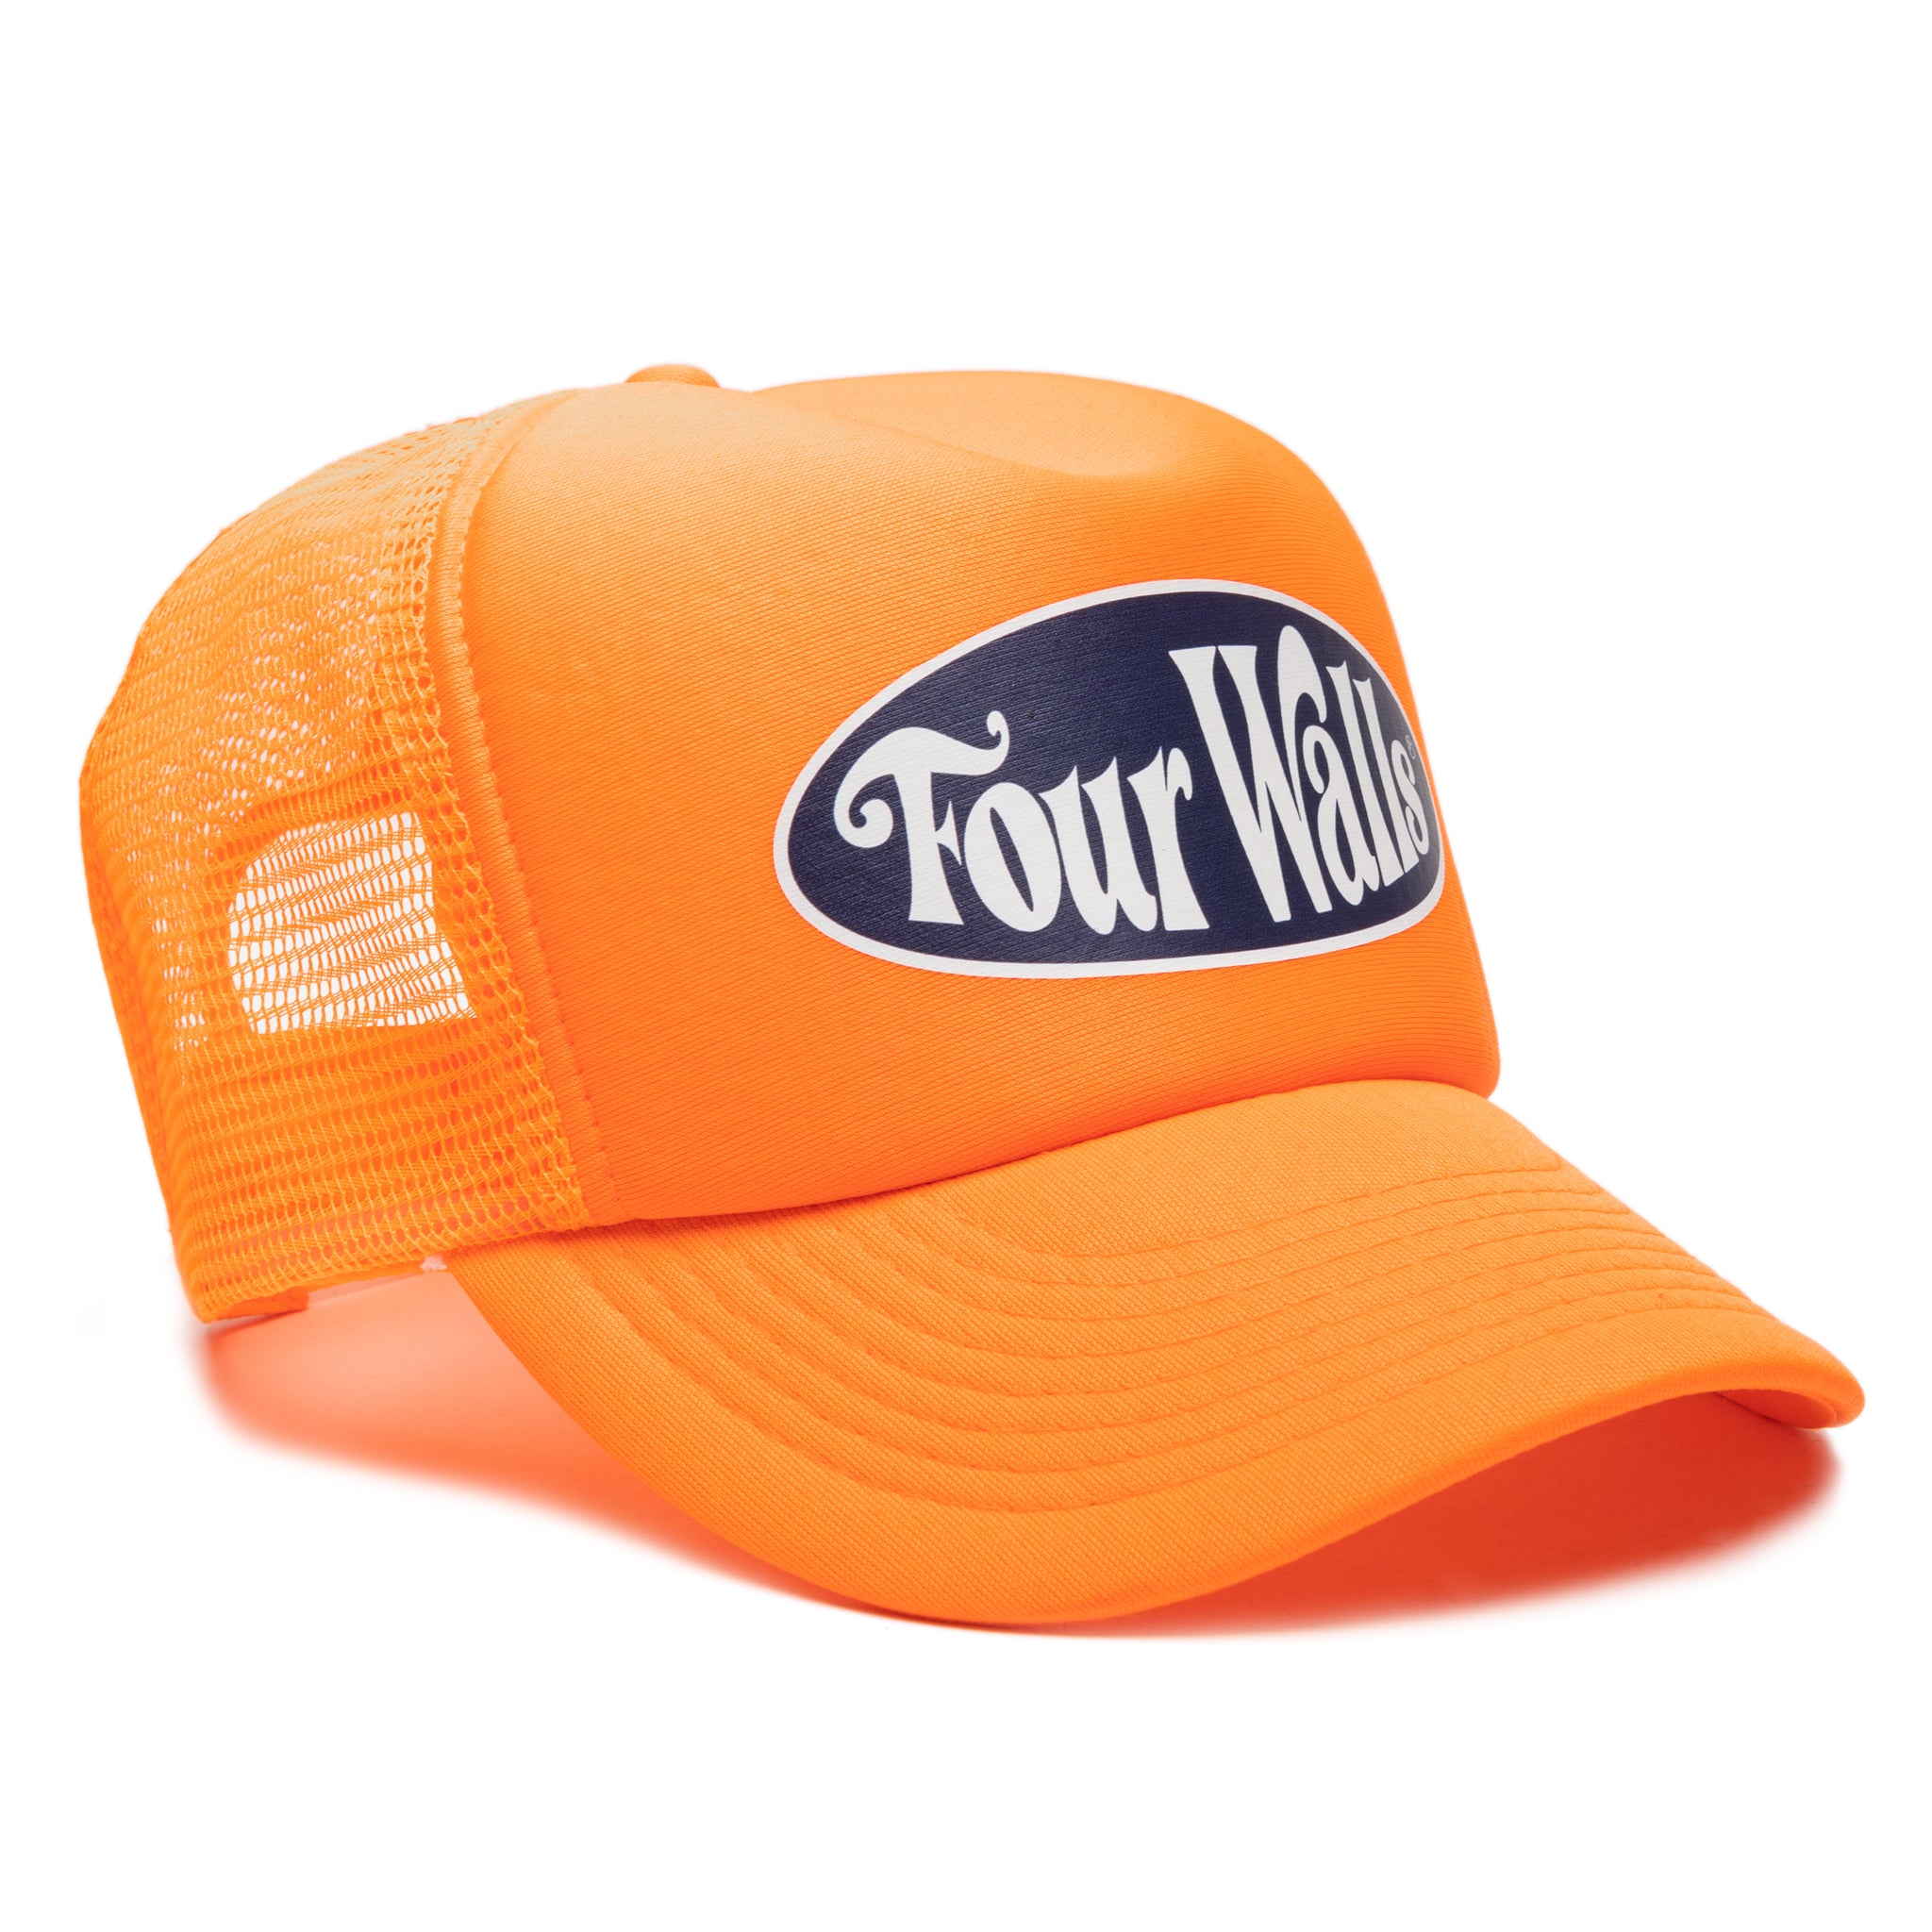 FOURWALLS OVAL TRUCKER HAT (NEON ORANGE)